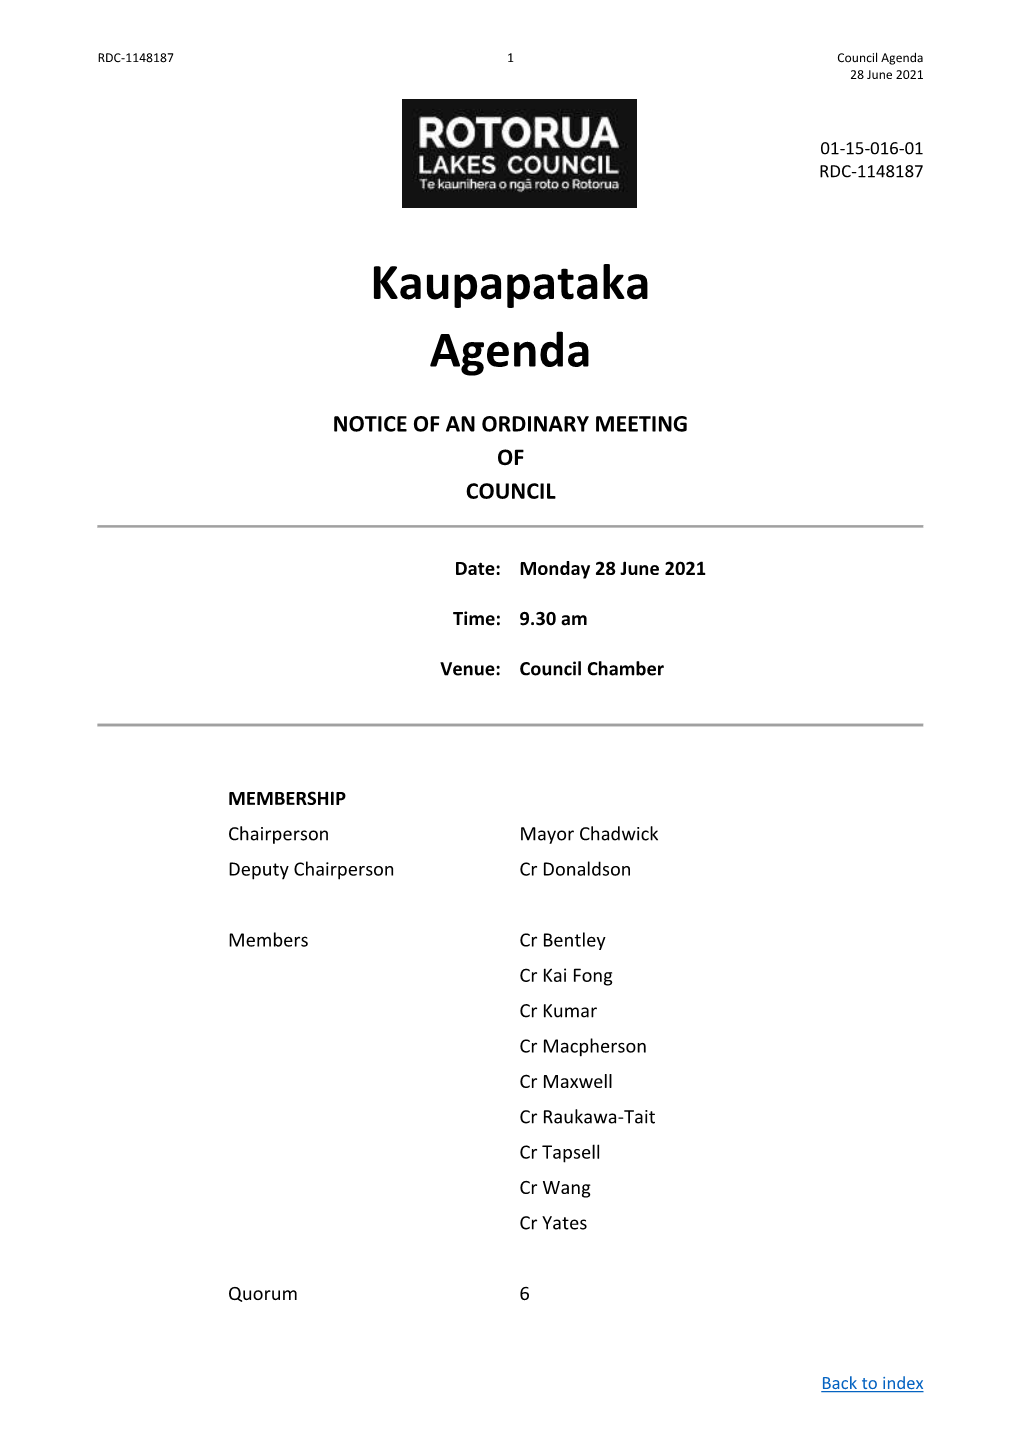 PUBLIC Agenda Council Meeting 28 June 2021.Pdf